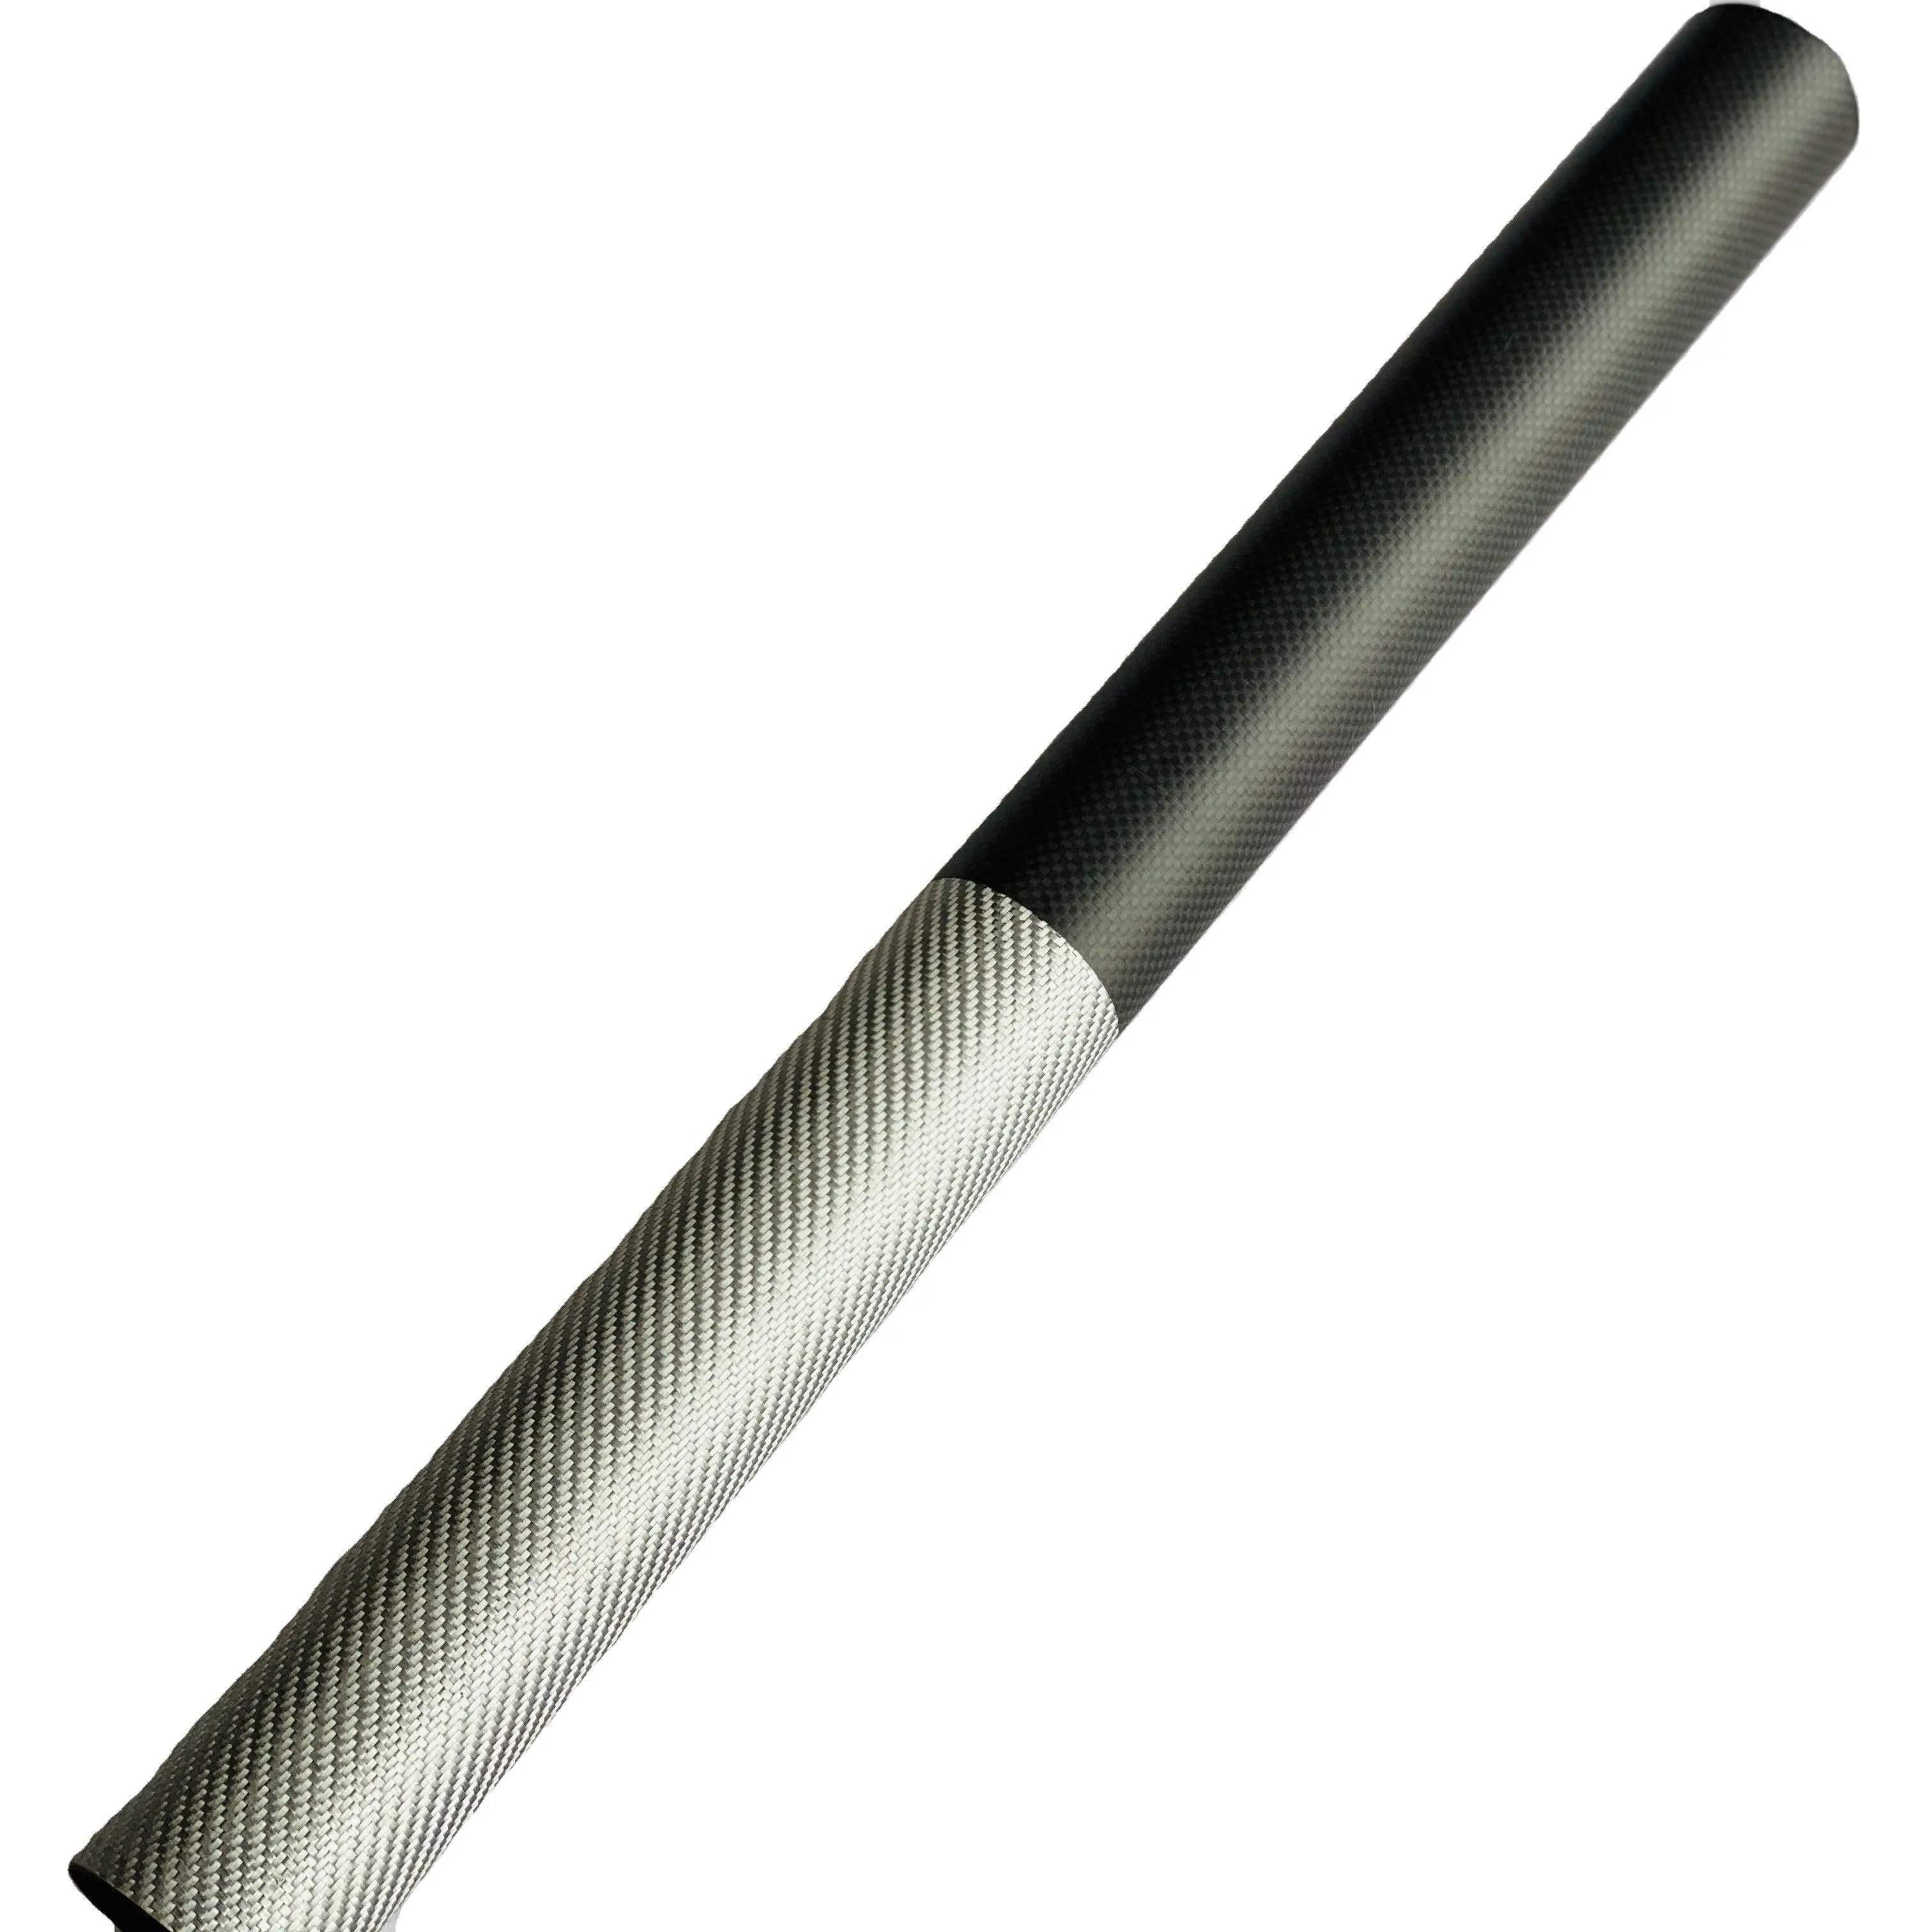 Made in China 20 mm diameter 3K glossy carbon fiber tube